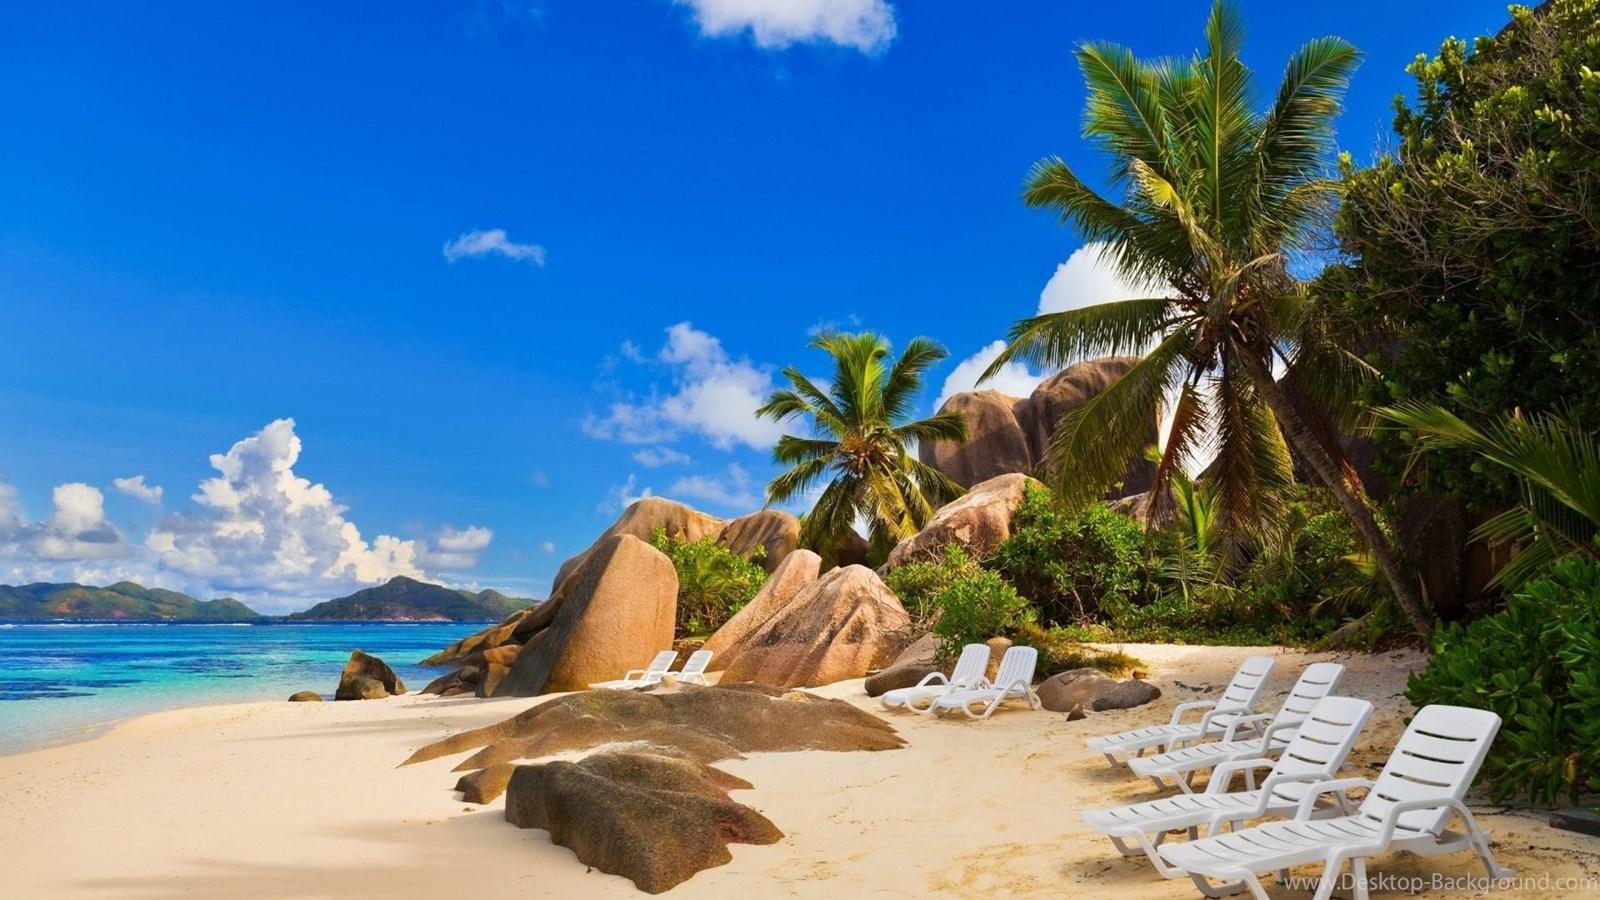 Vacation Resort On The Beach Widescreen Wallpaper Desktop Background